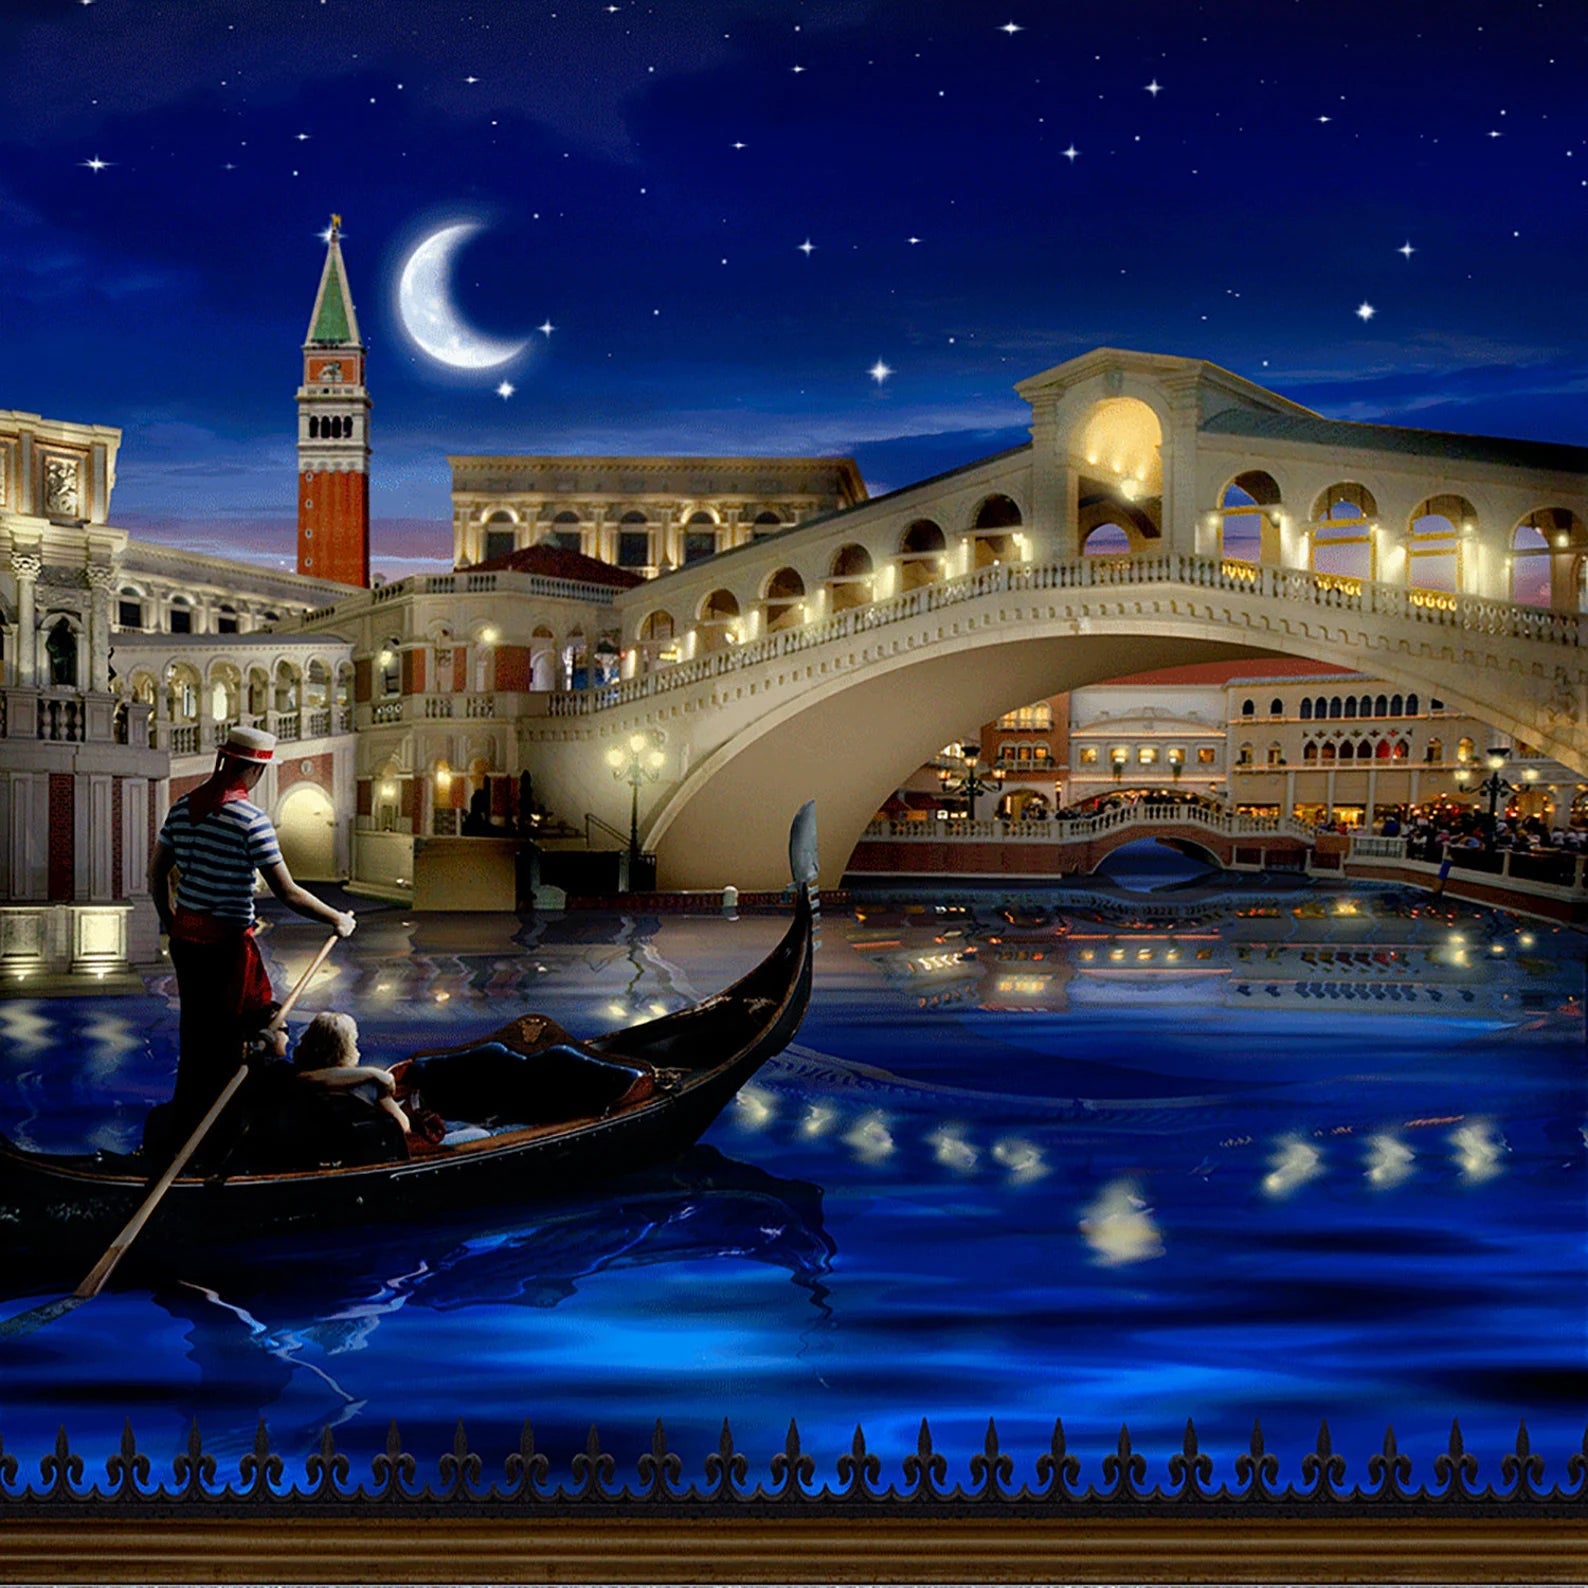 Venice Gondola Canals at Night Photography Backdrop - Basic 10  x 8  